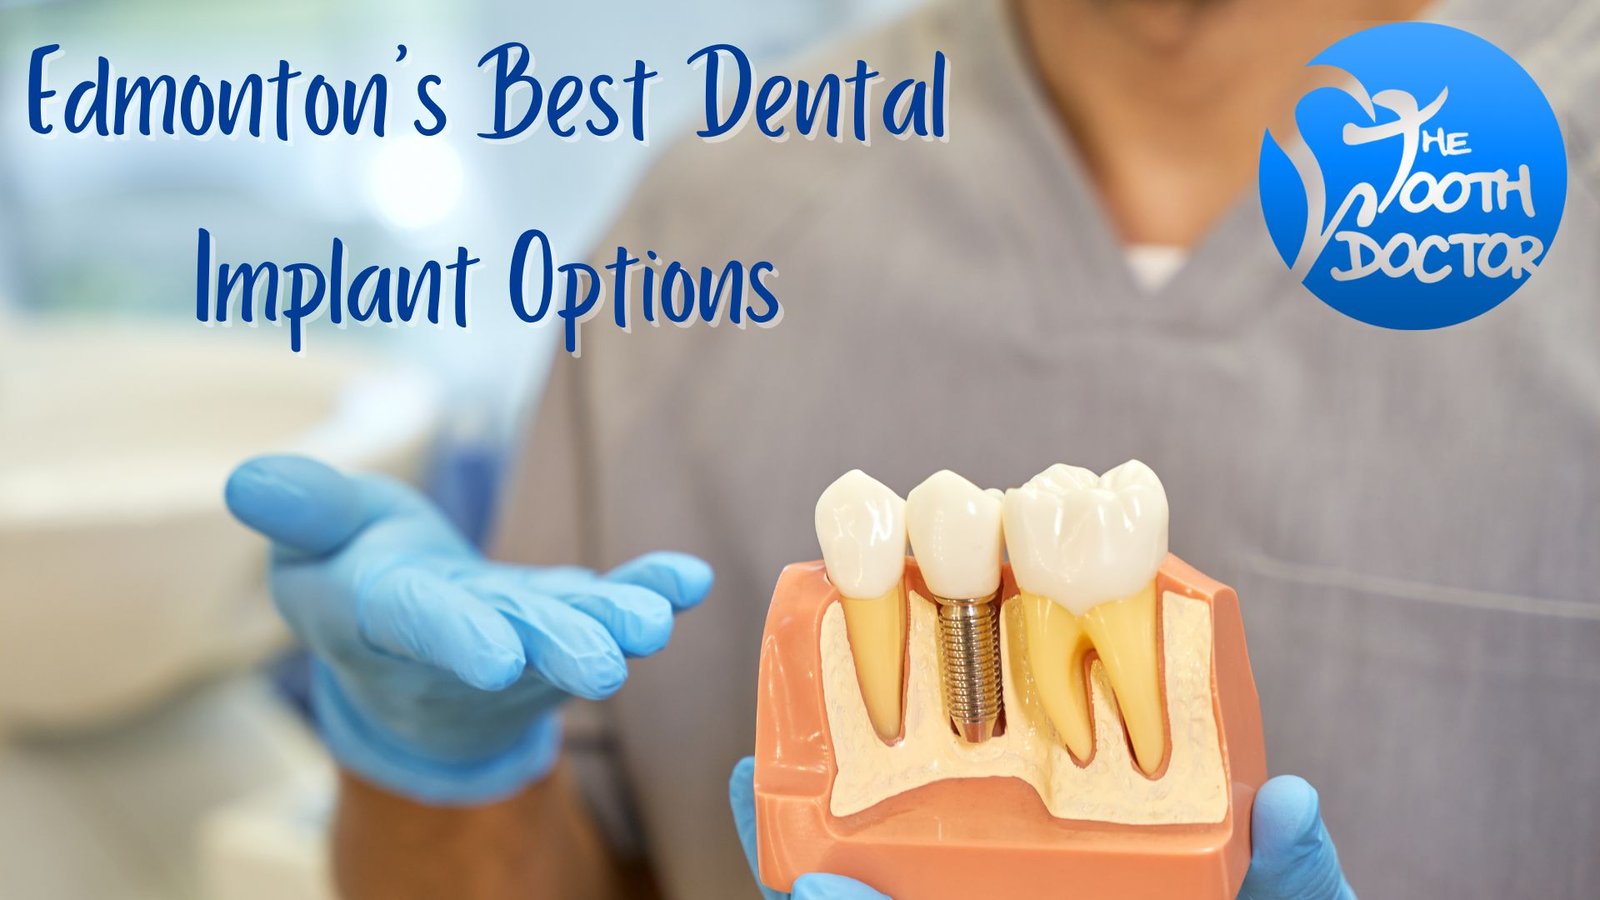 Edmonton's Best Dental Implant Options